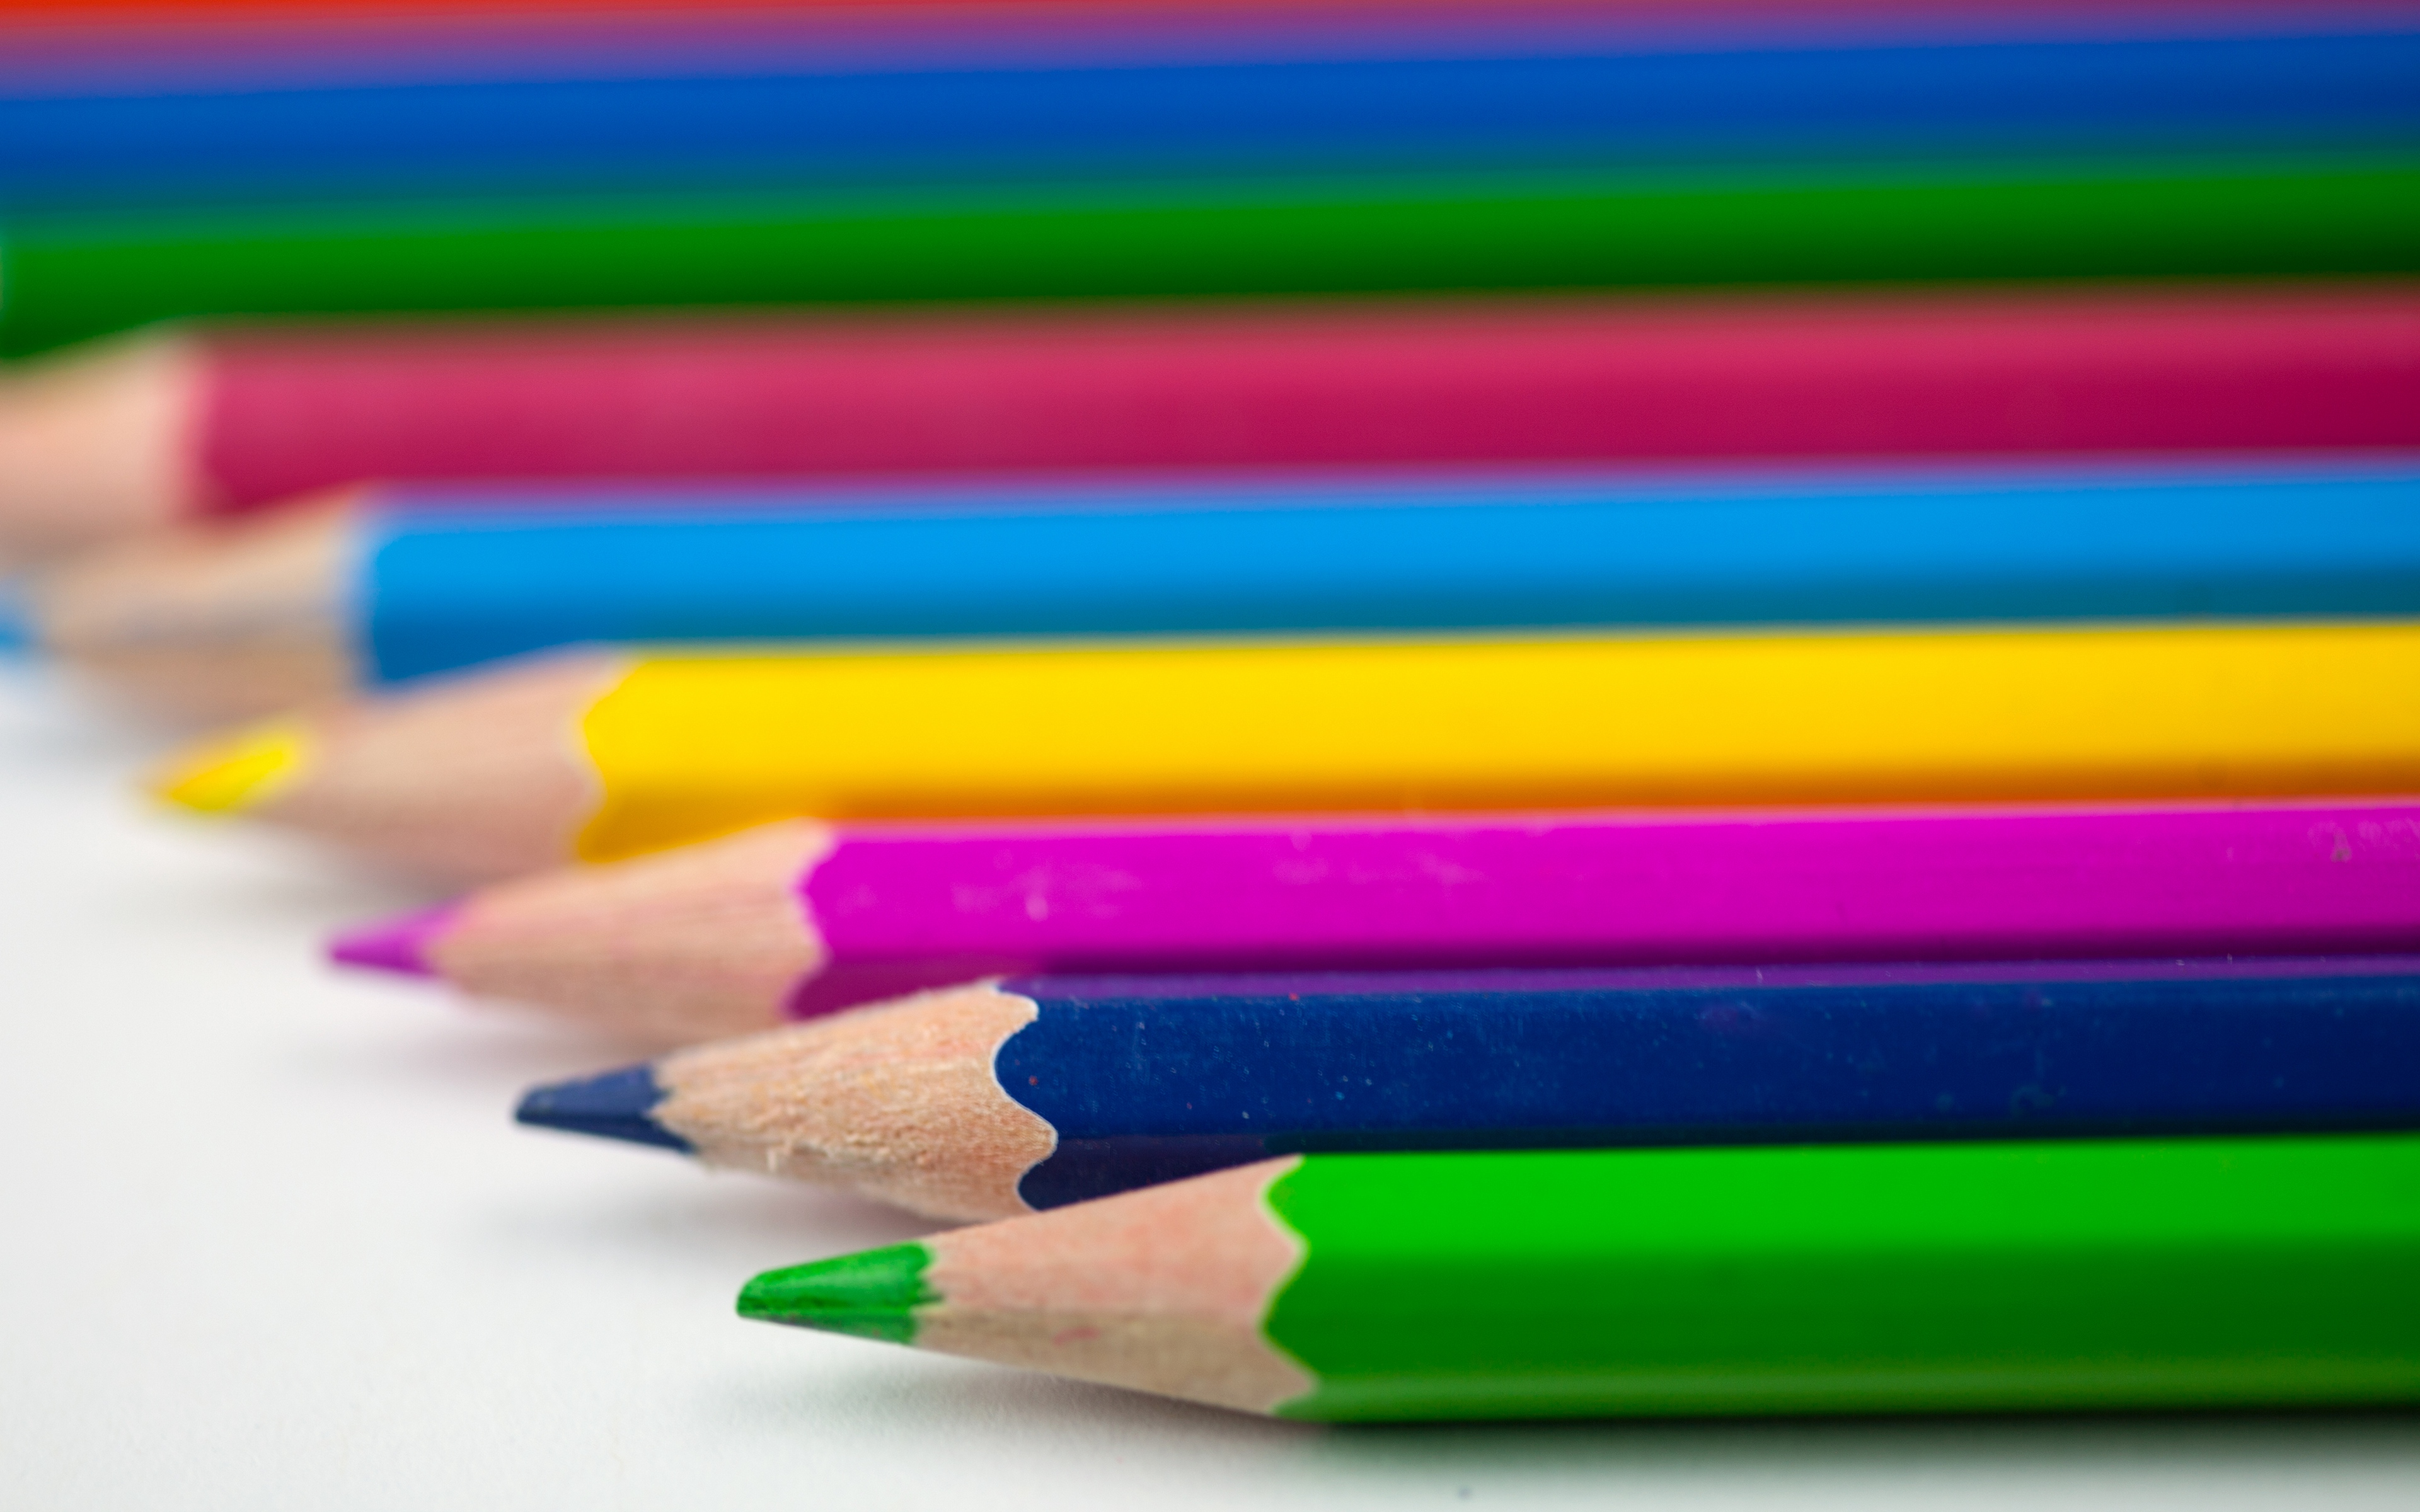 4К обои, разноцветные карандаши, разное, креативное фото, 4K wallpapers, multi-colored pencils, various, creative photo